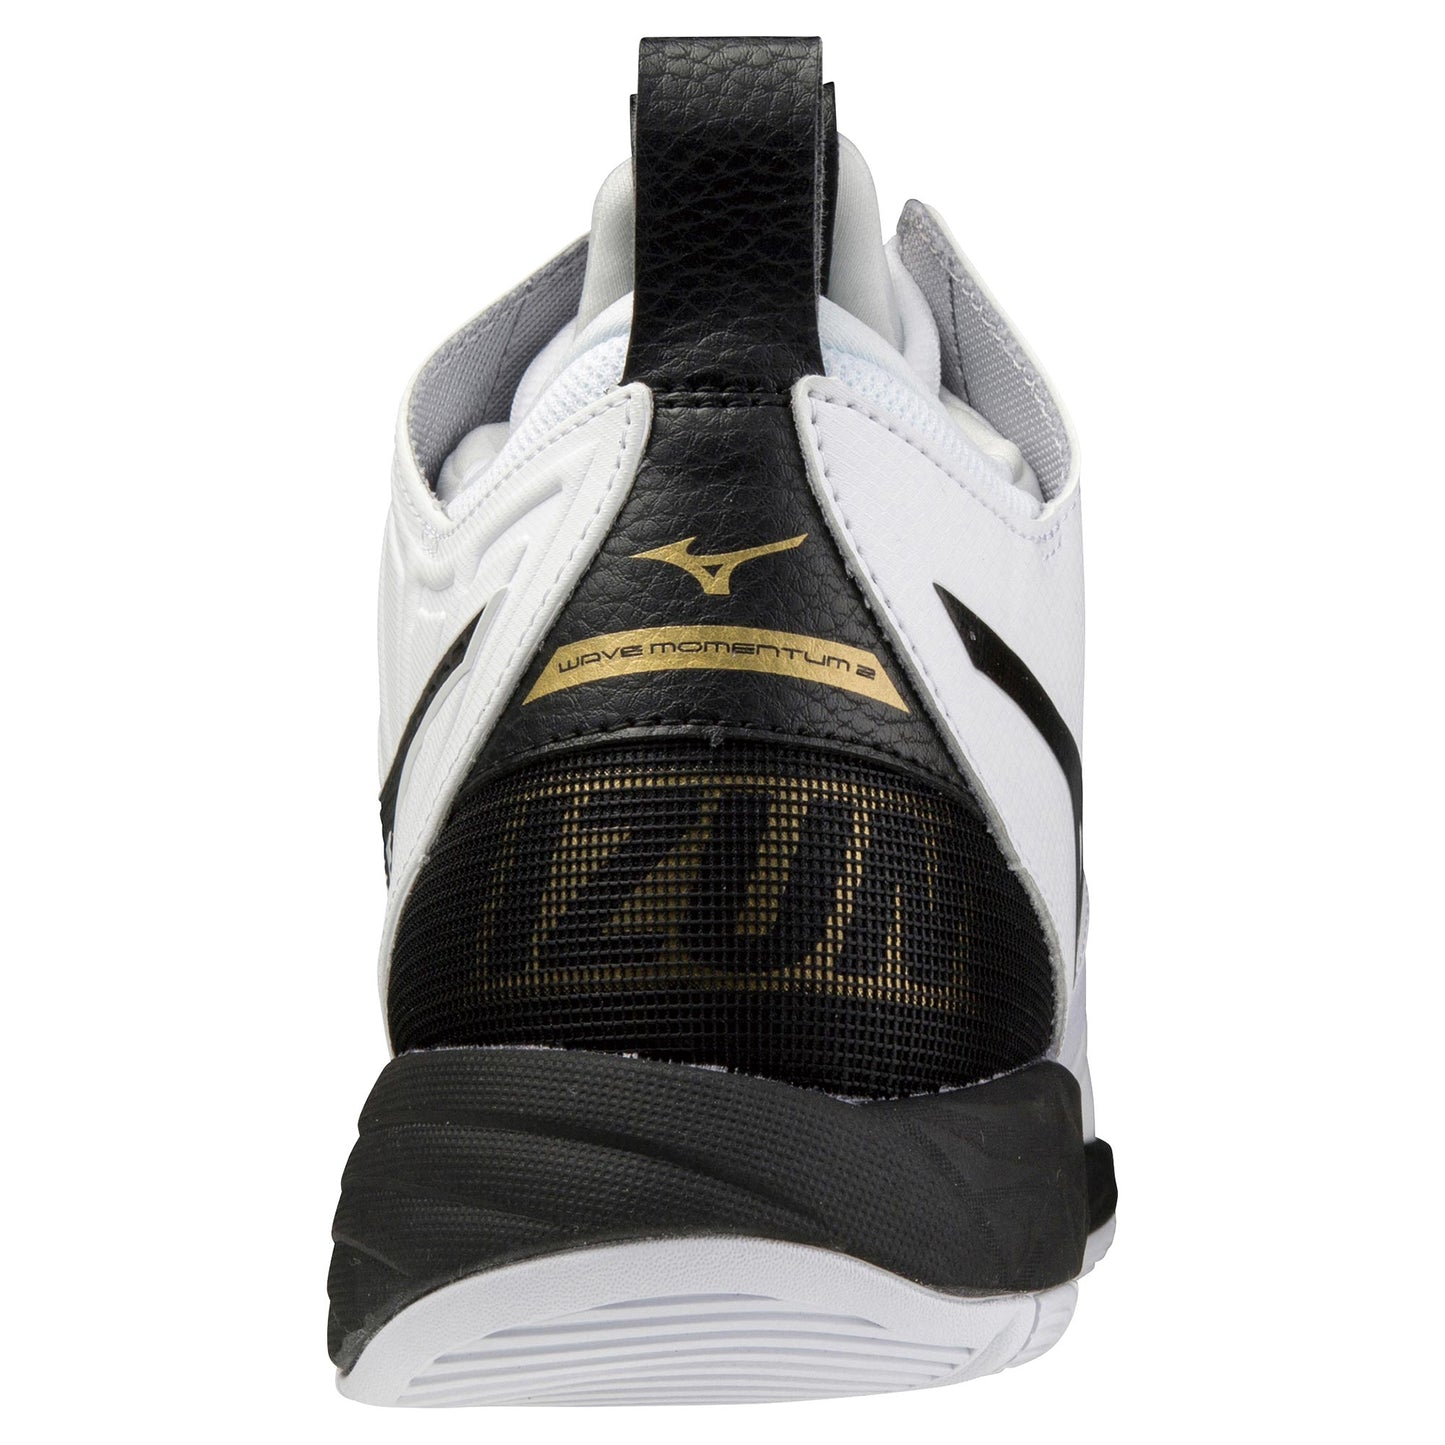 MIZUNO WAVE MOMENTUM 2 MID V1GA2117 09 White/Black/Gold Unisex Volleyball Shoes